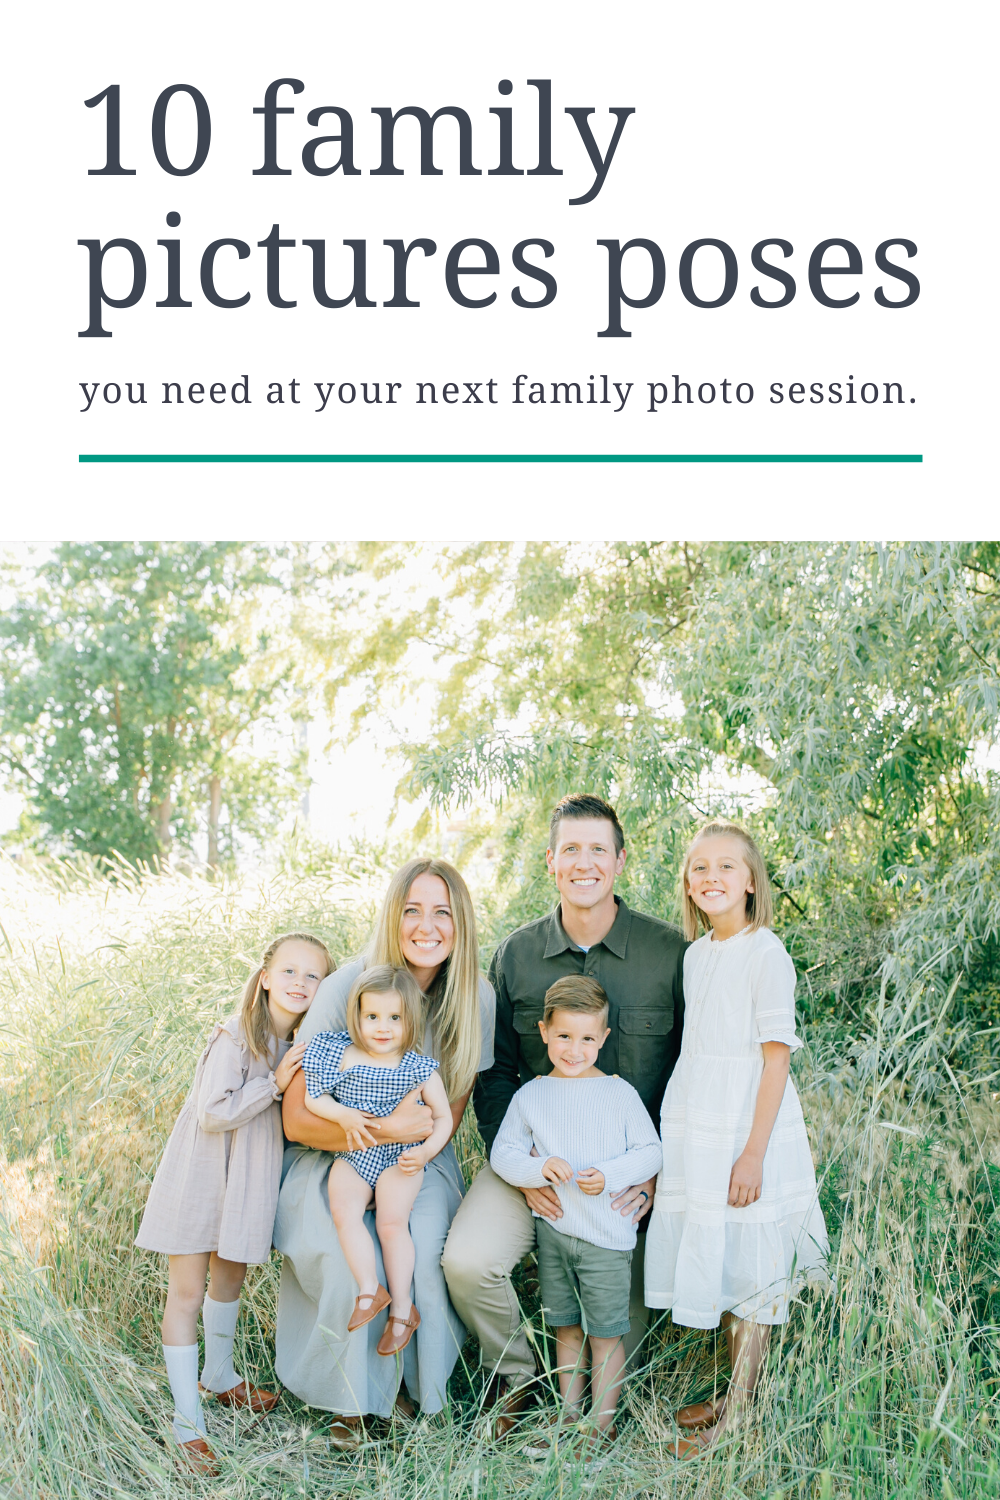 Beach Family Photoshoot Ideas: Tips from a Pro Photographer